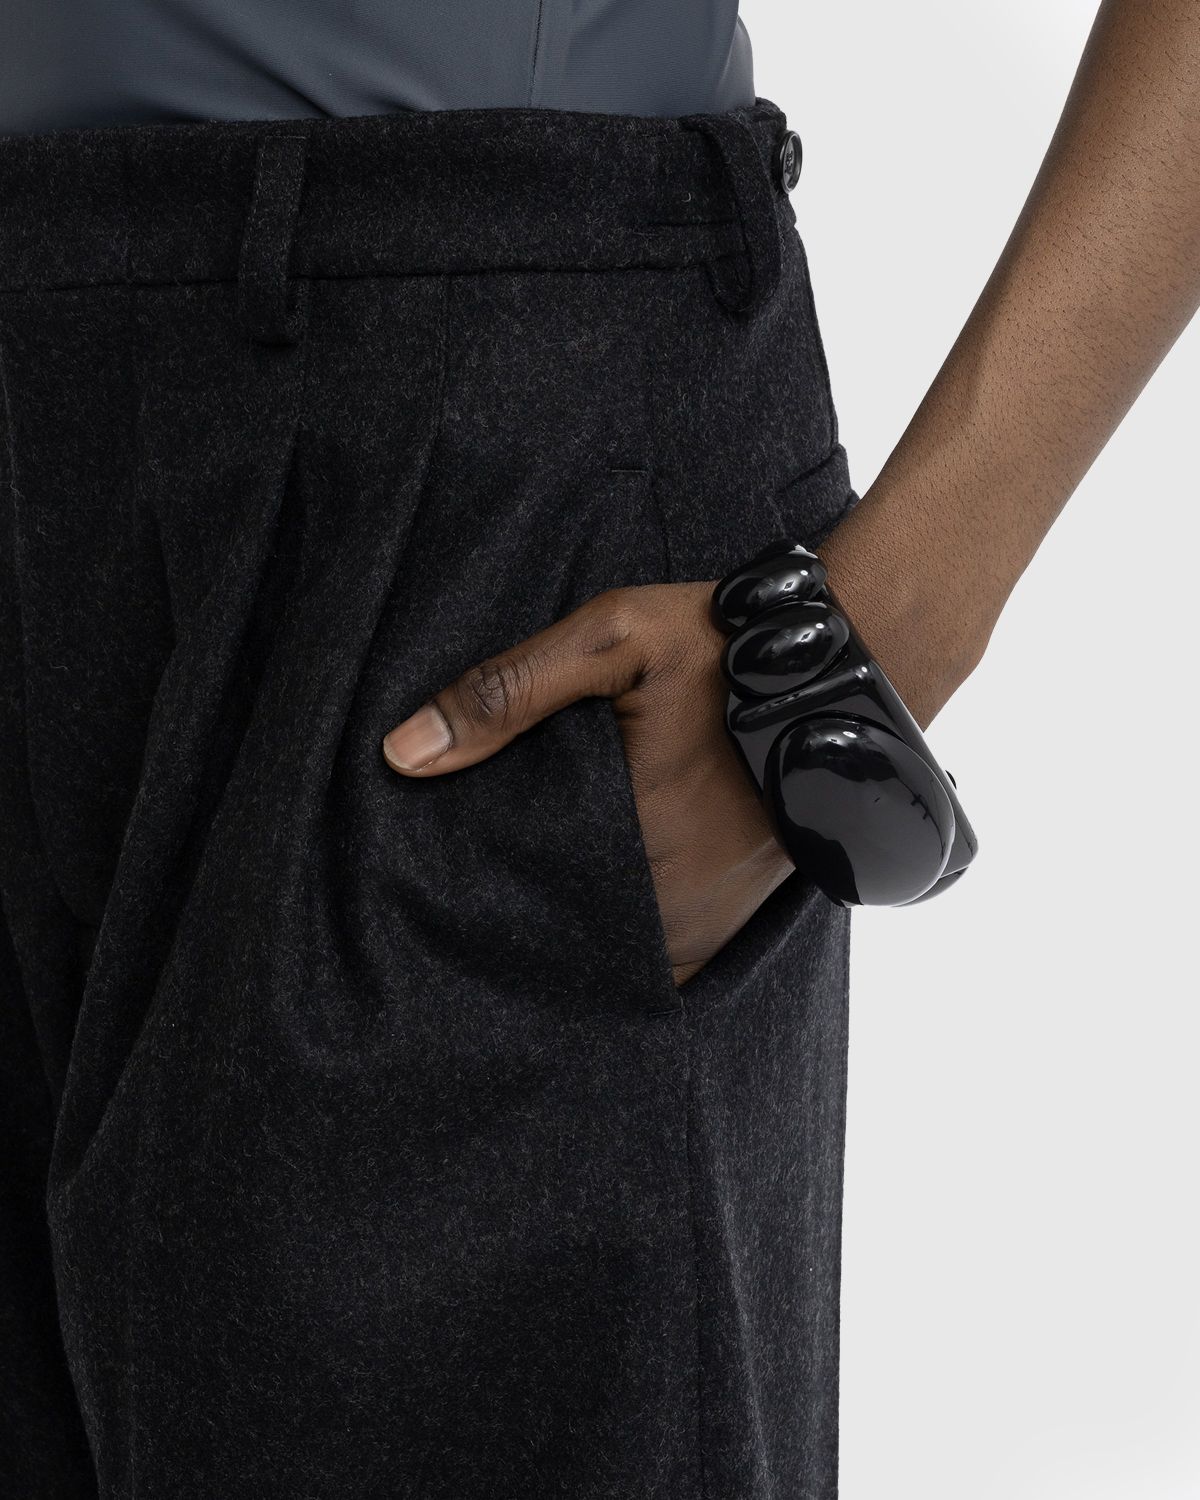 Jean Paul Gaultier – Shiny Square Bracelet Black - Jewelry - Black - Image 5